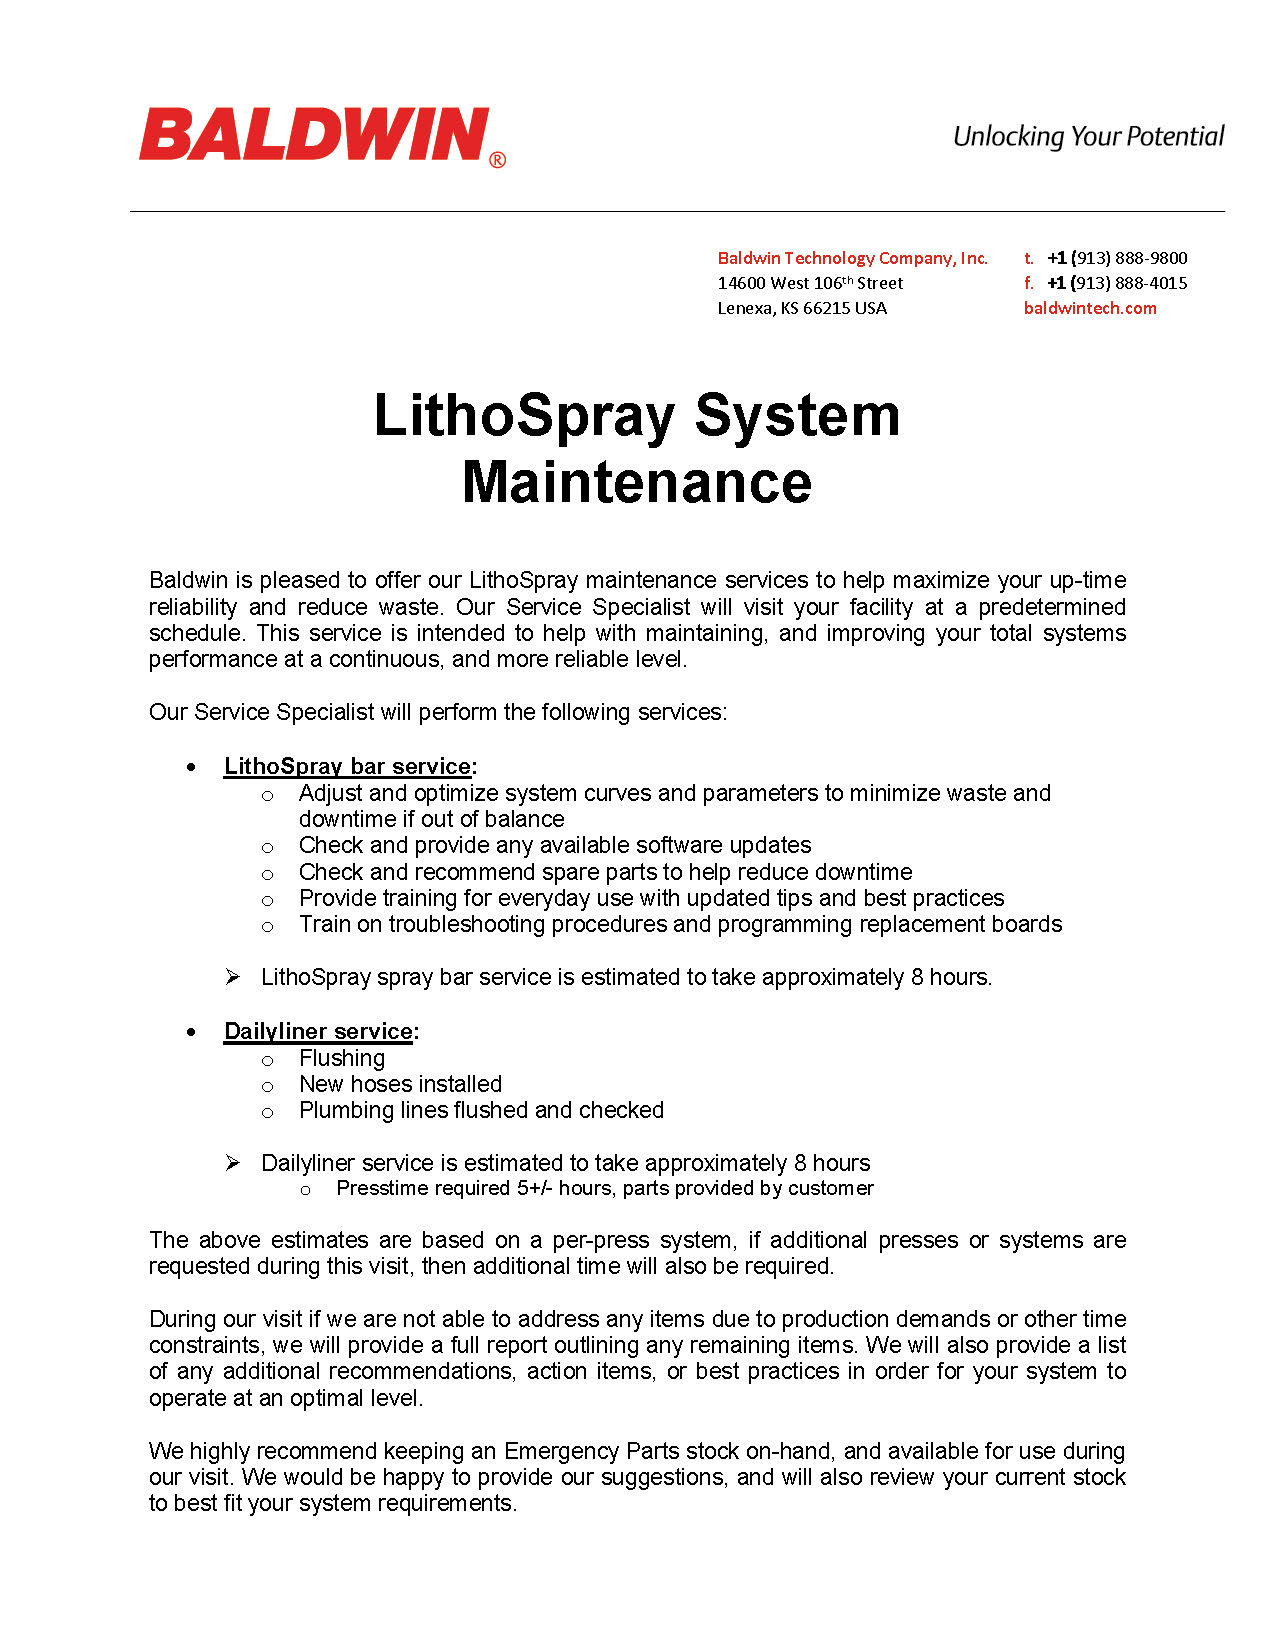 Mantenimiento de LithoSpray PDF_Page_1.jpg